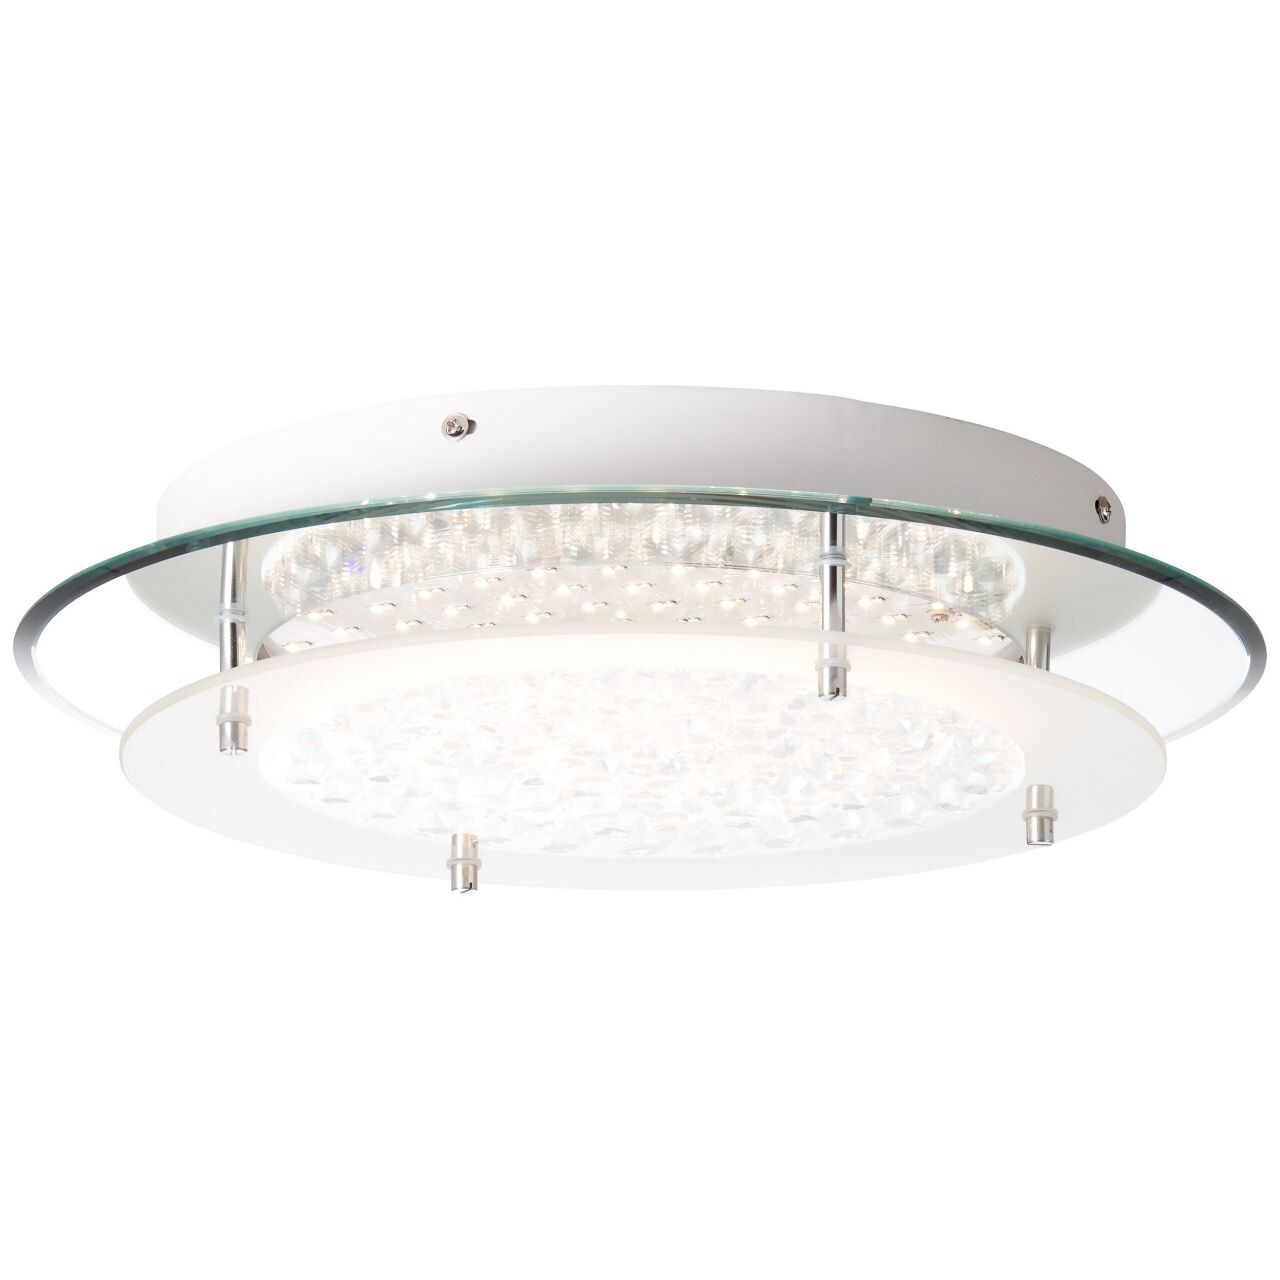 Brelight Lampe Jolene LED Wand- und Deckenleuchte 36cm chrom/transparent   1x 16W LED integriert, (1800lm, 3000-6000K)  